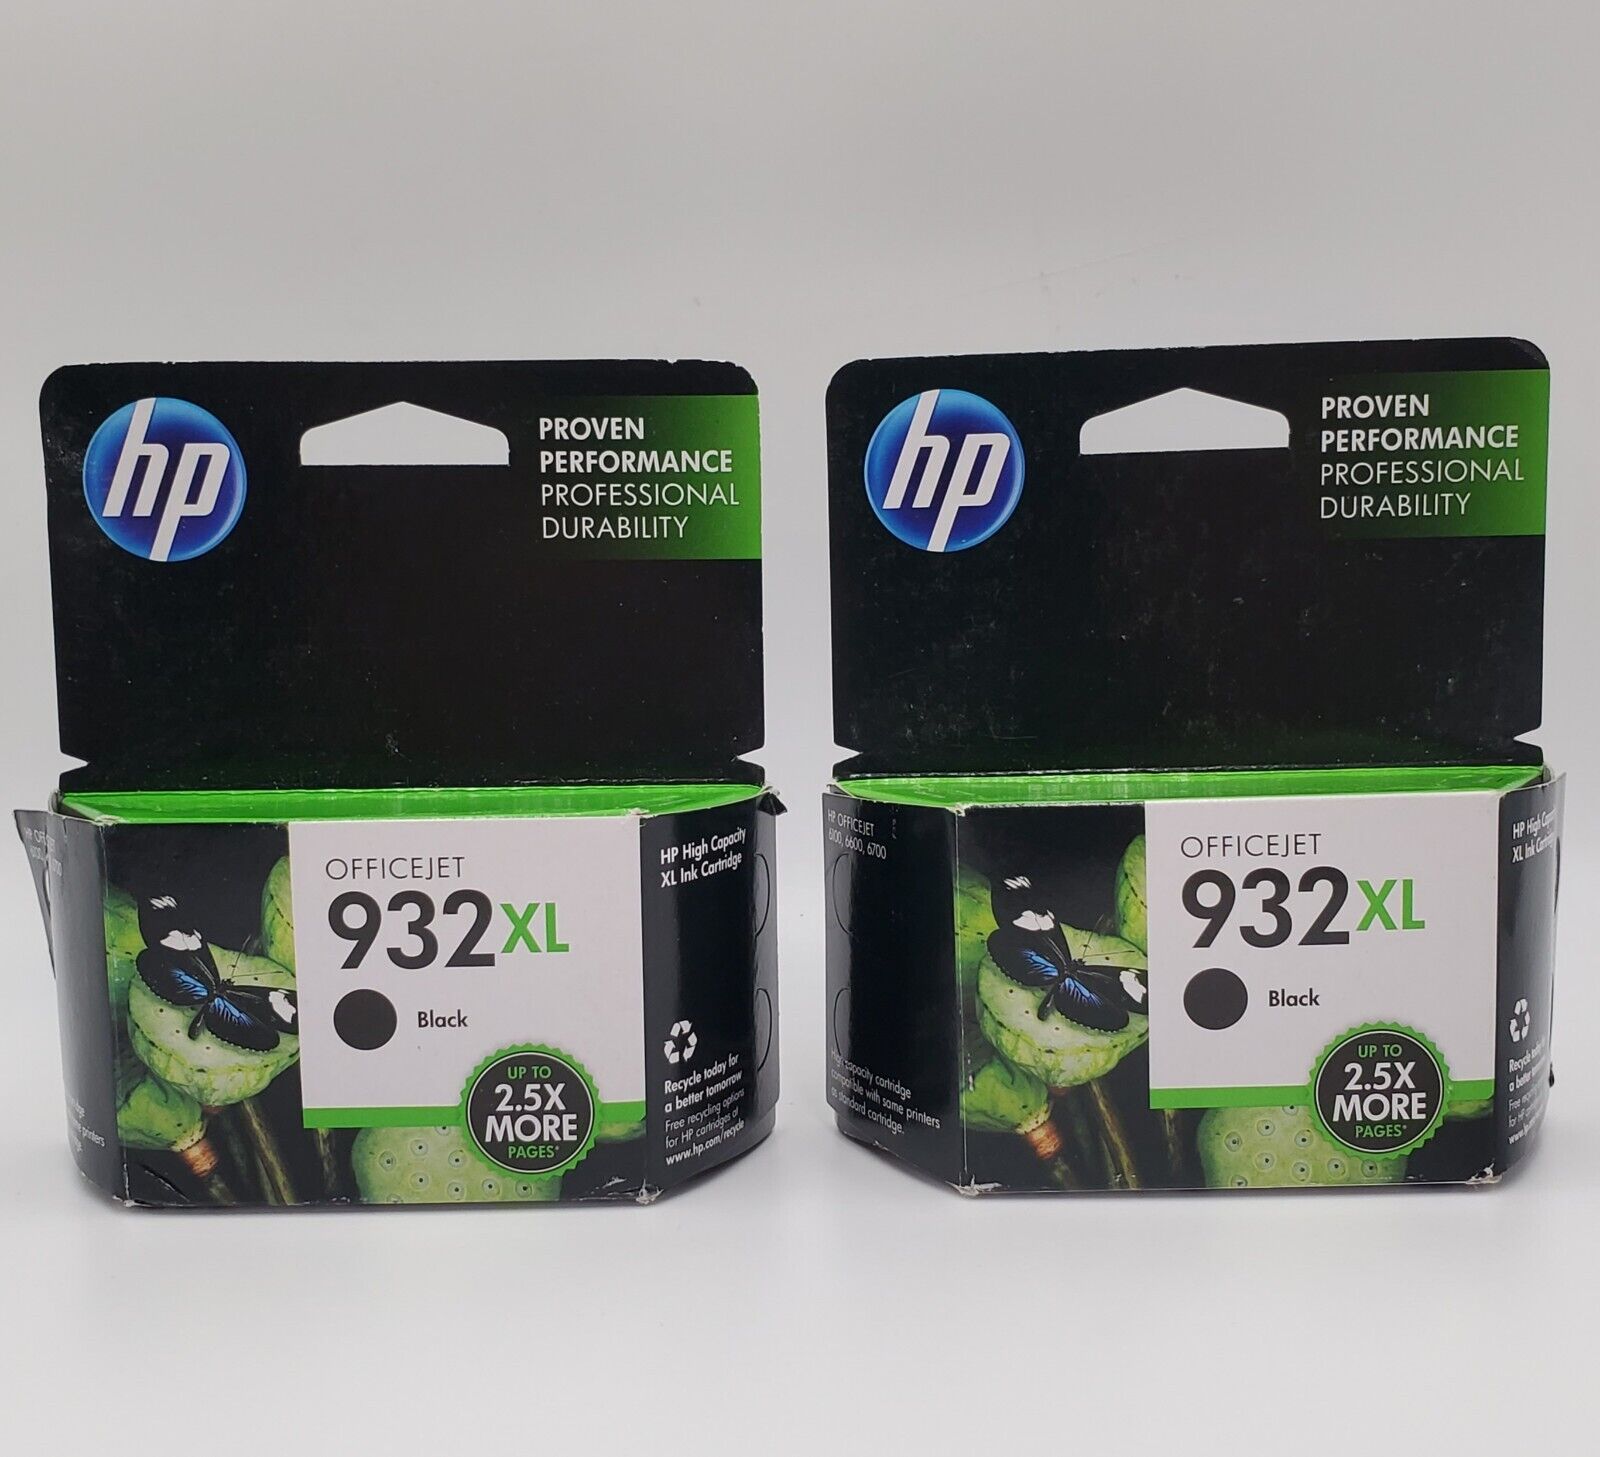 2 HP 932XL Ink Cartridges Black Noir High Yield Authentic Sealed NEW OEM 2/15